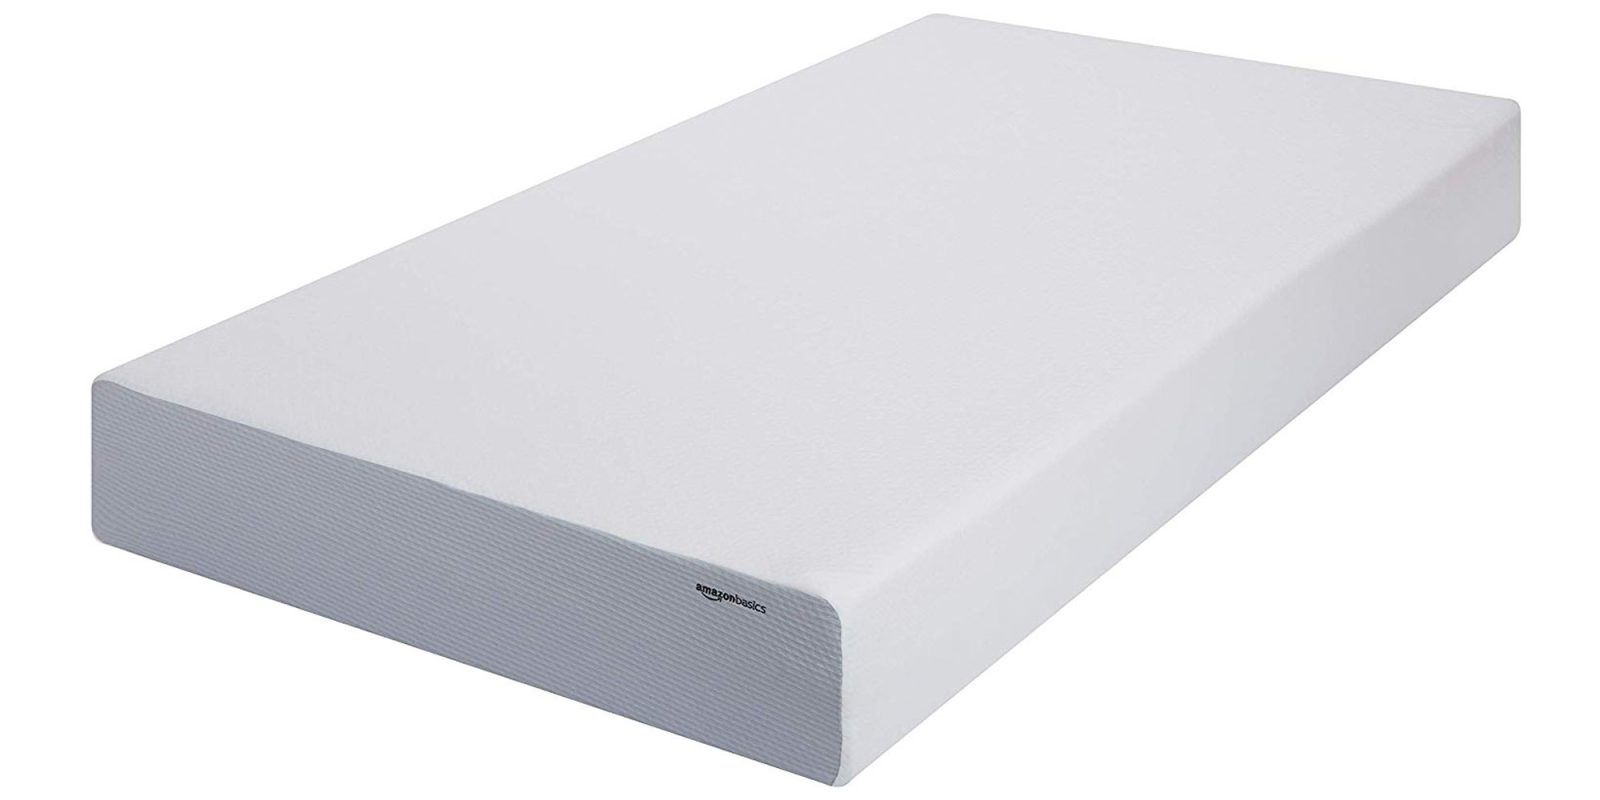 amazonbasics memory foam mattress reviews